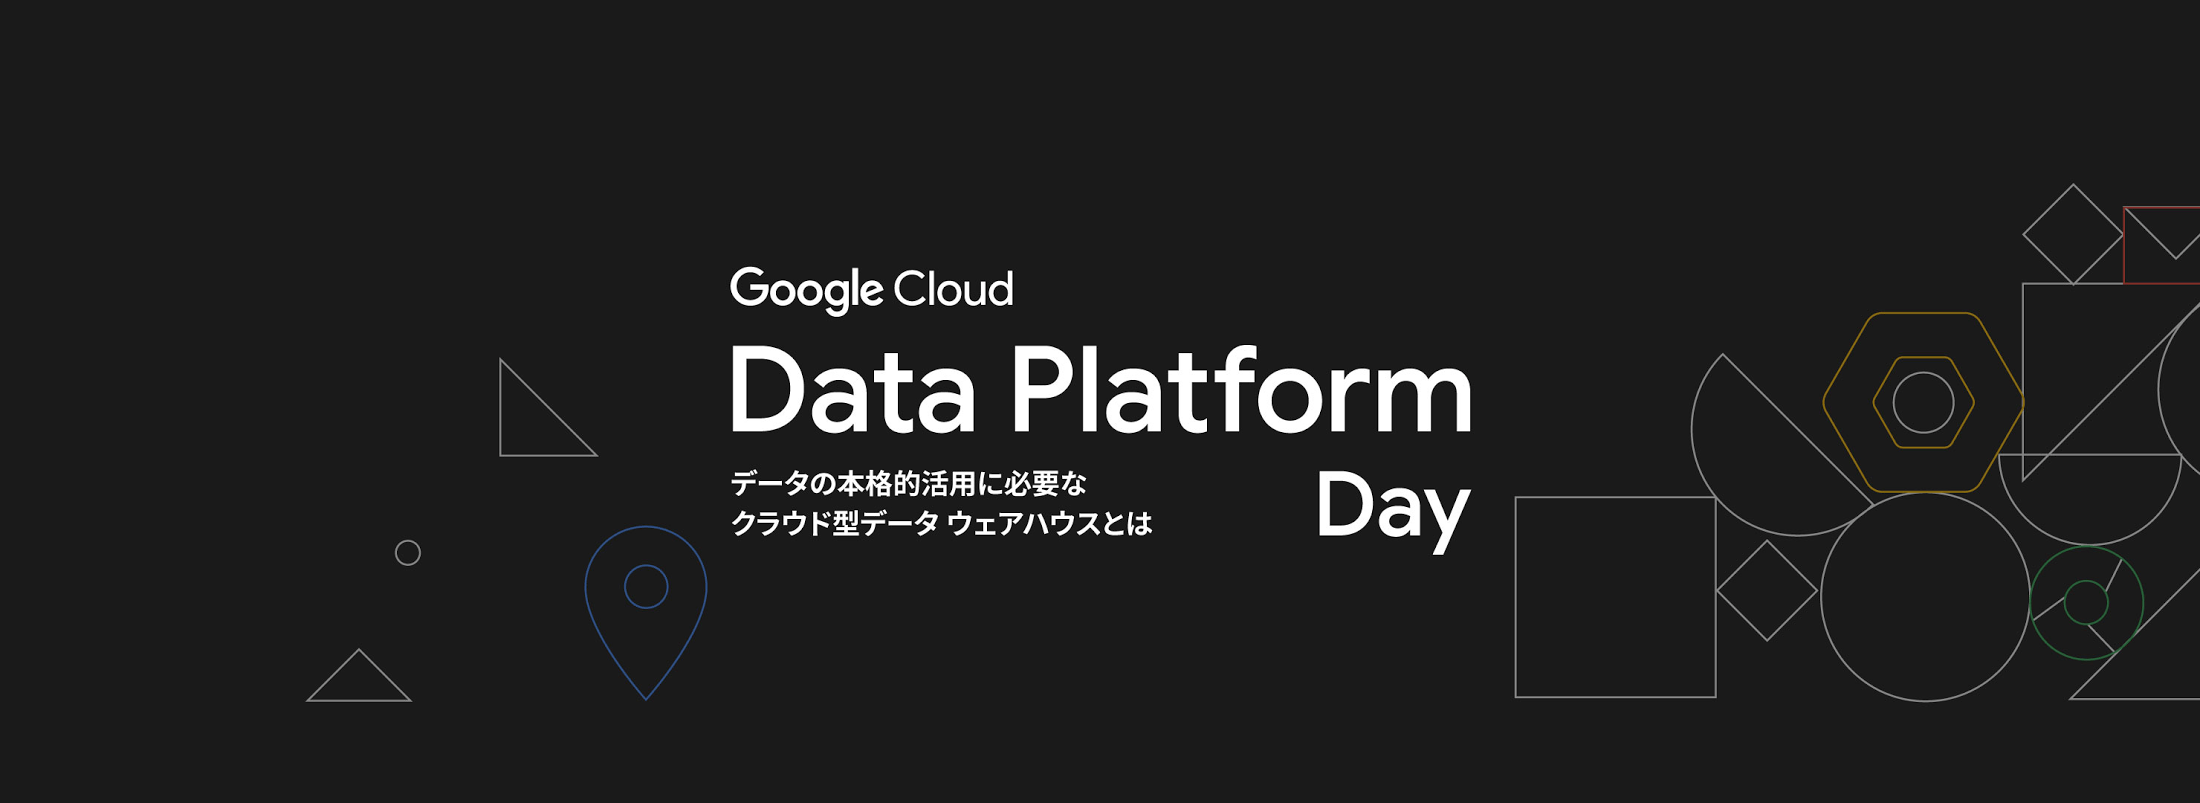 Google Cloud Data Platform Day